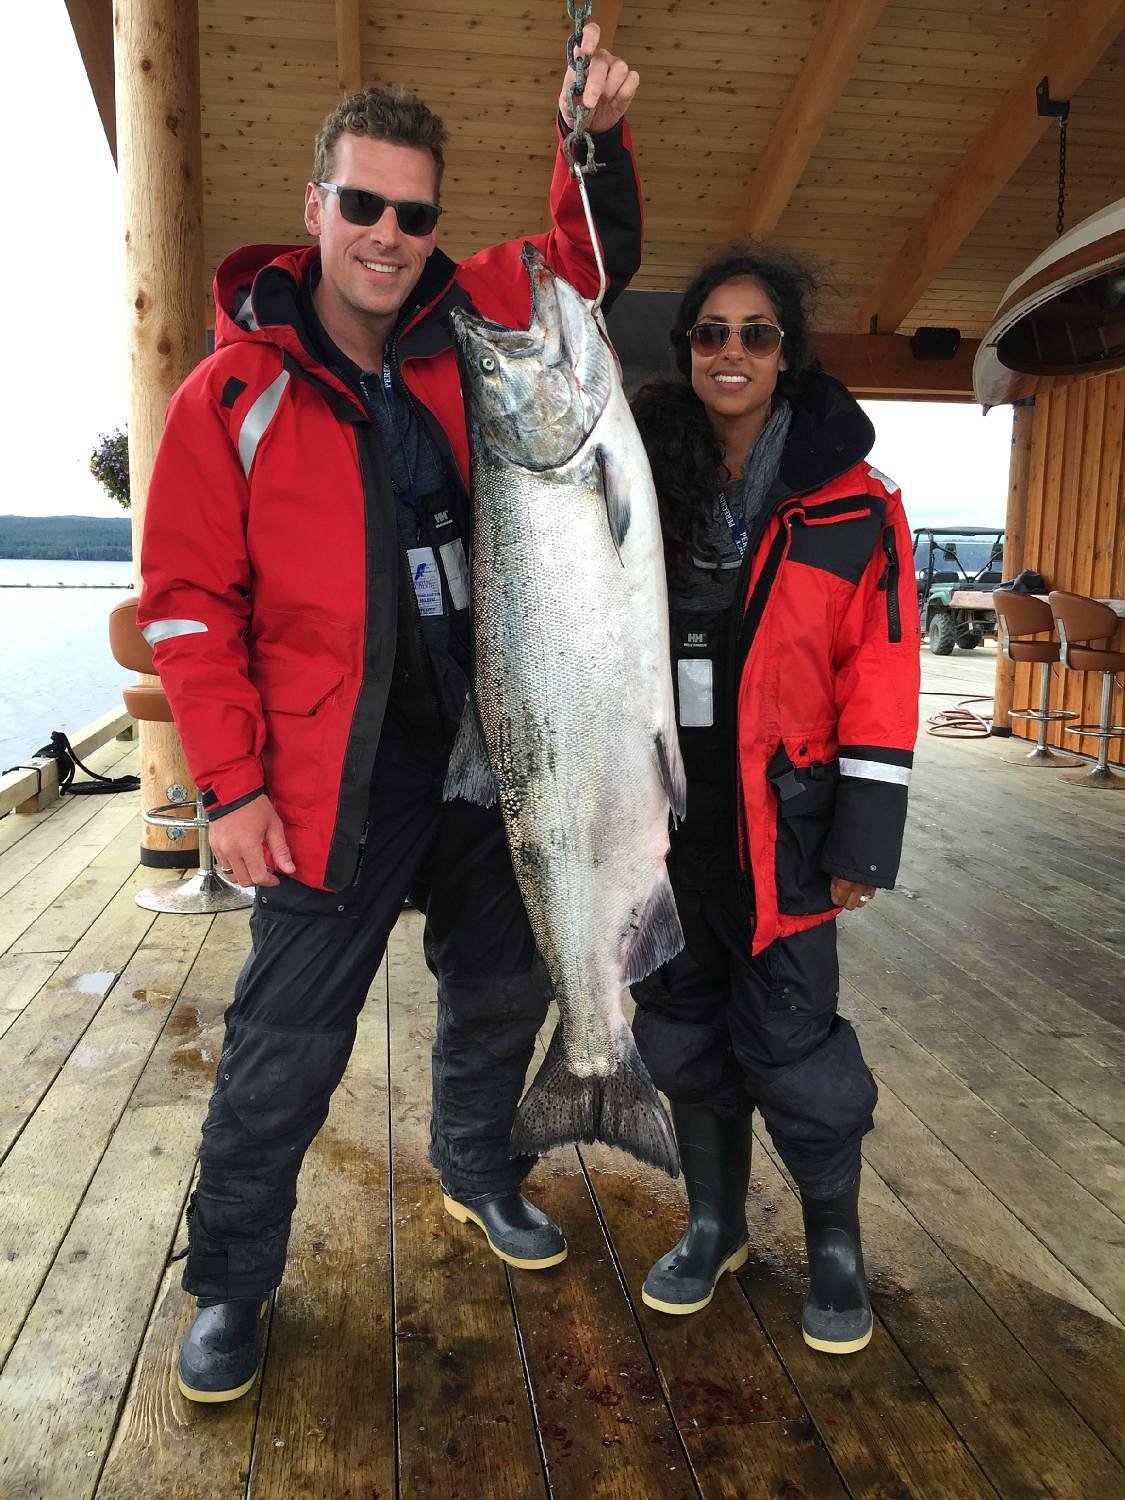 Chinook King Salmon Fishing Funny Alaskan Fisherman Quote Premium T-Shirt